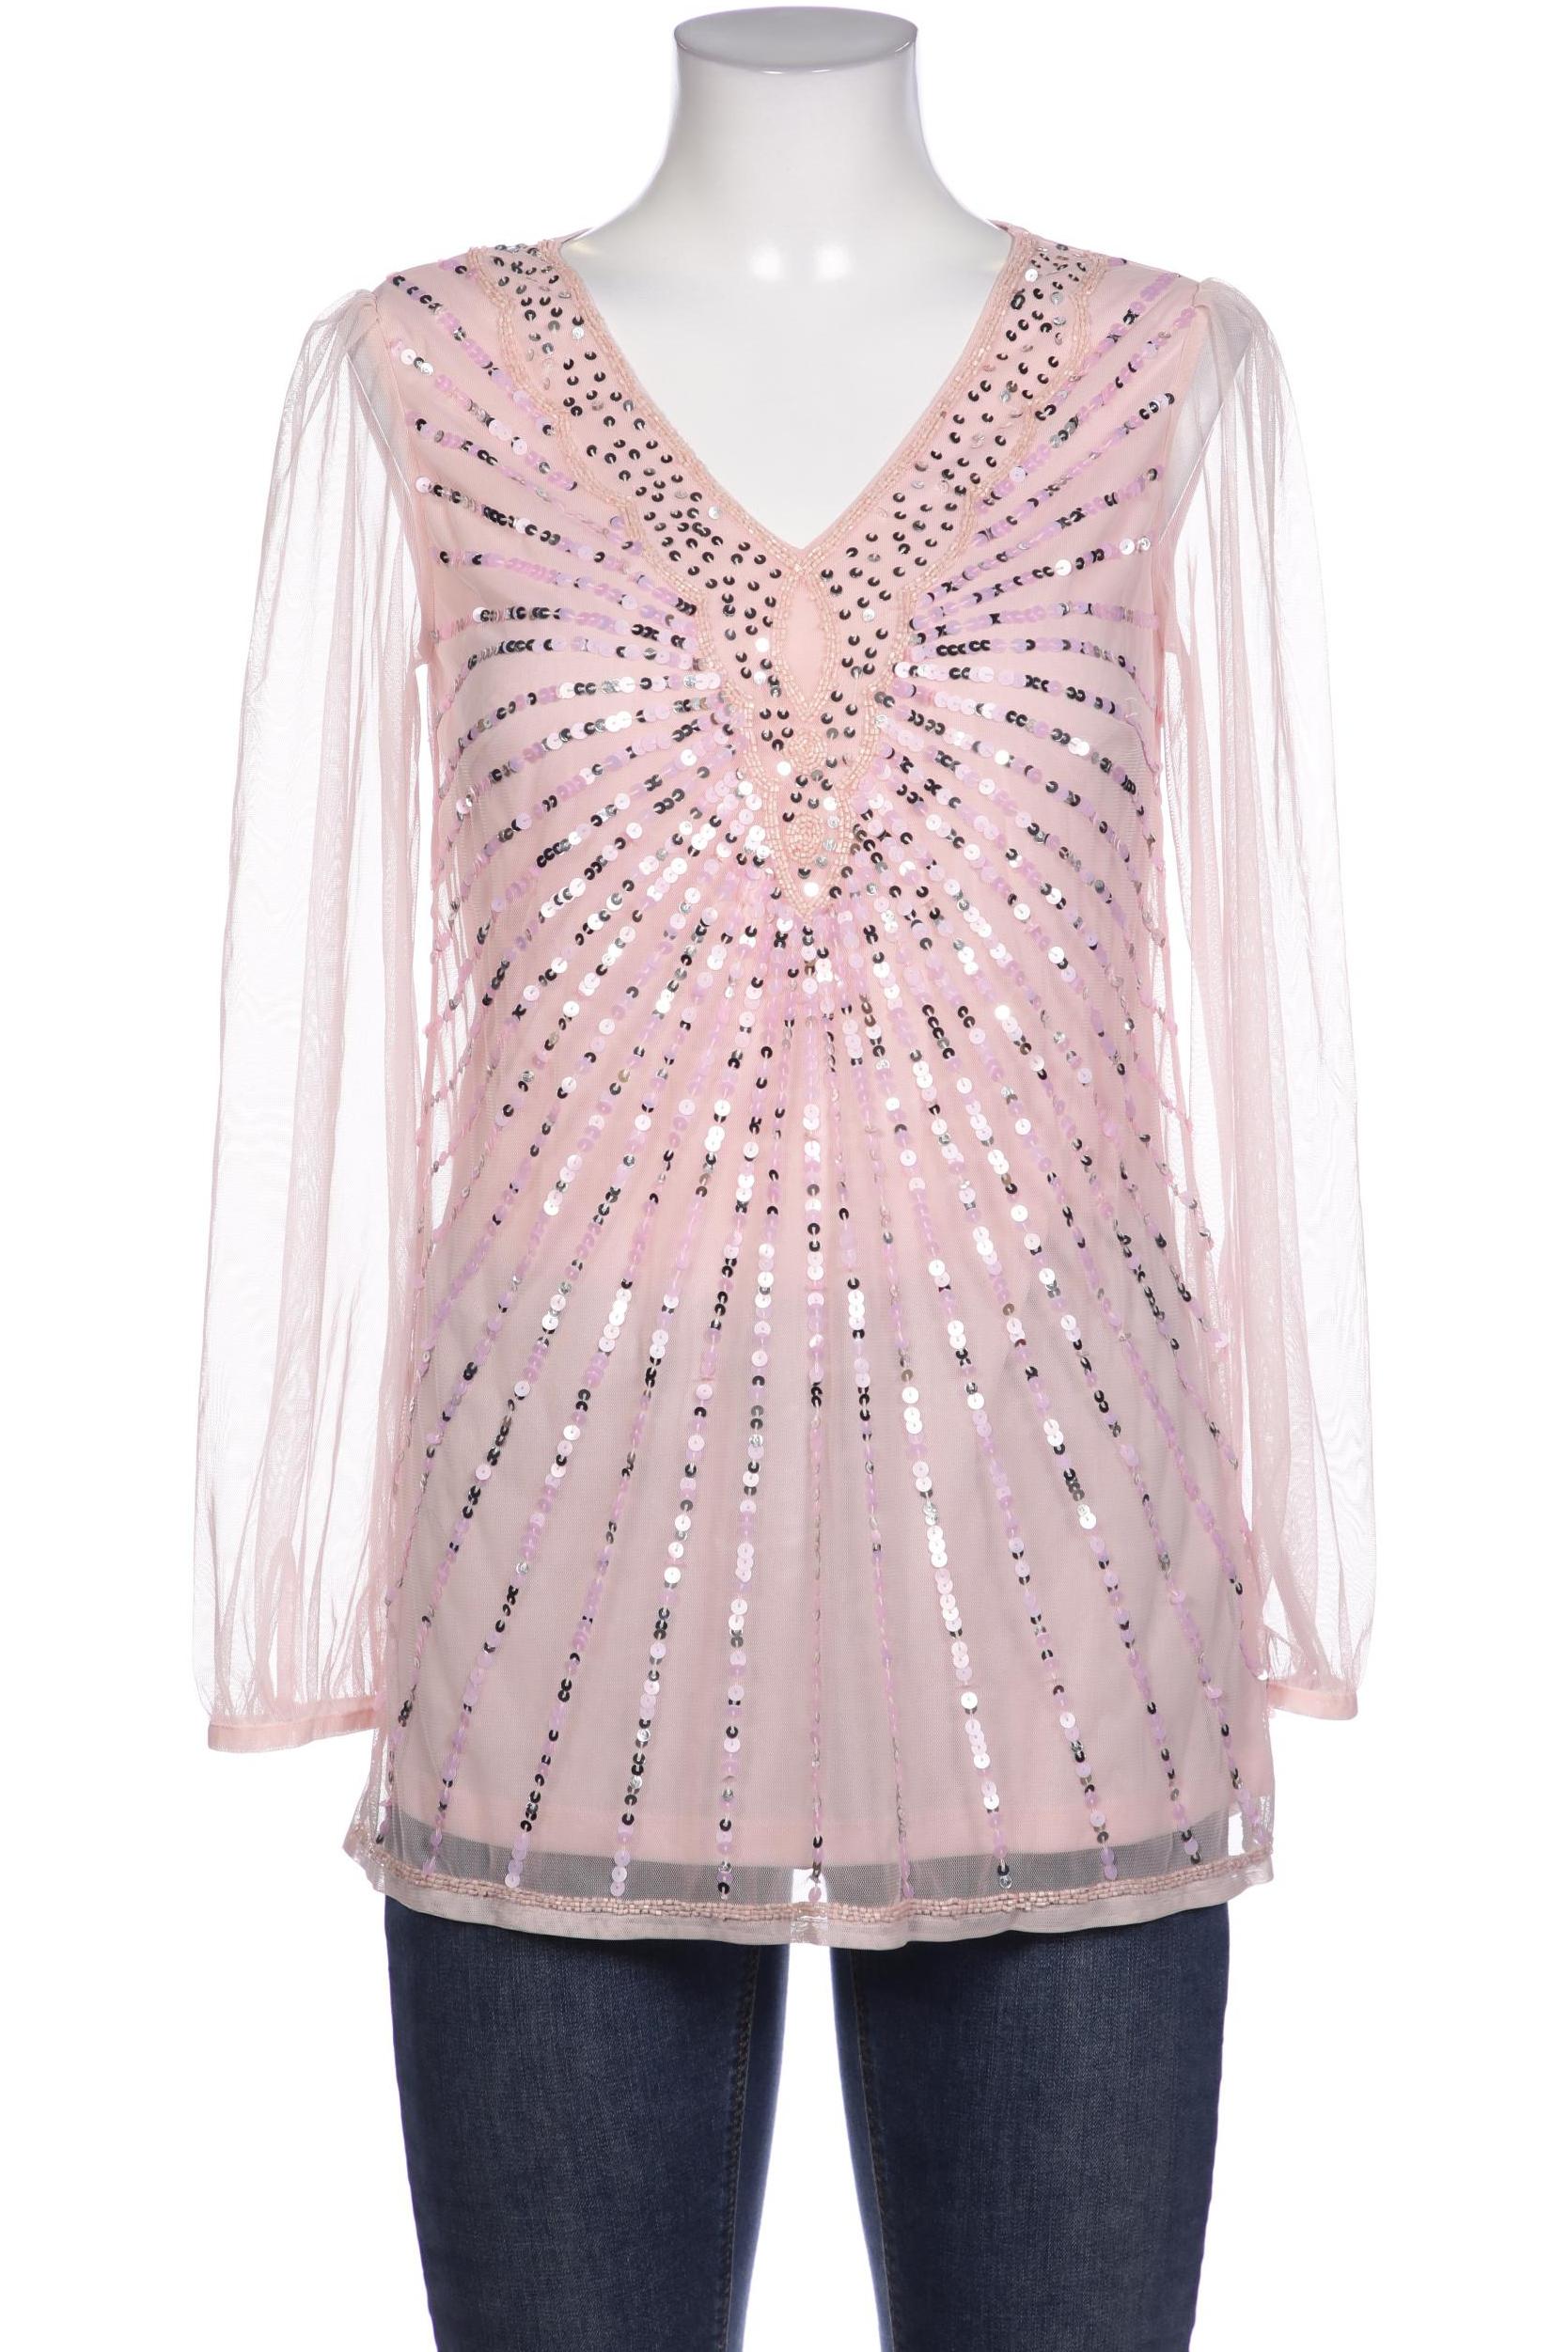 Ashley Brooke Damen Bluse, pink von Ashley Brooke